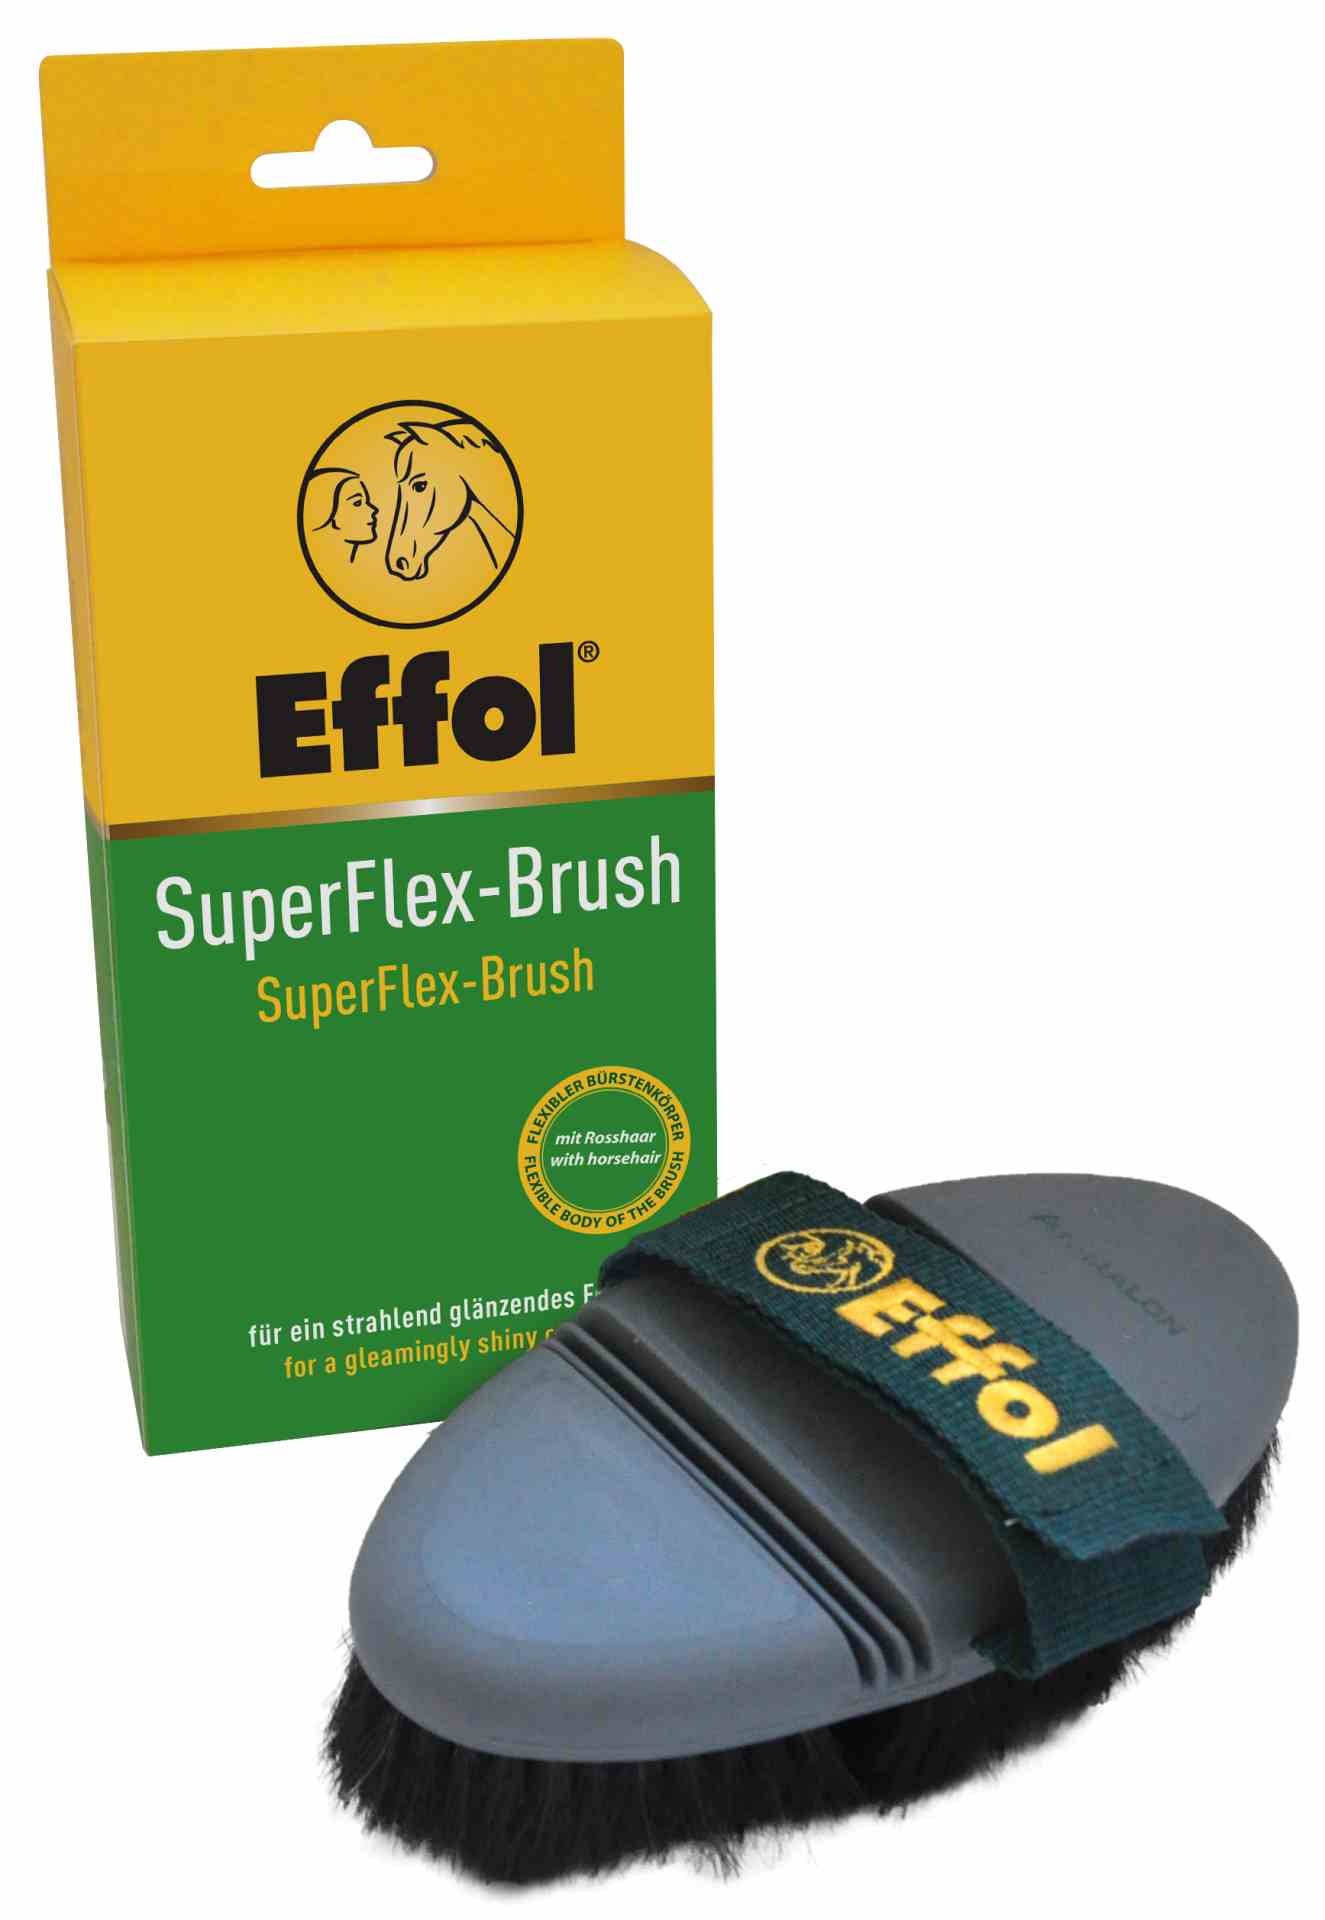 Effol SuperFlex-Brush